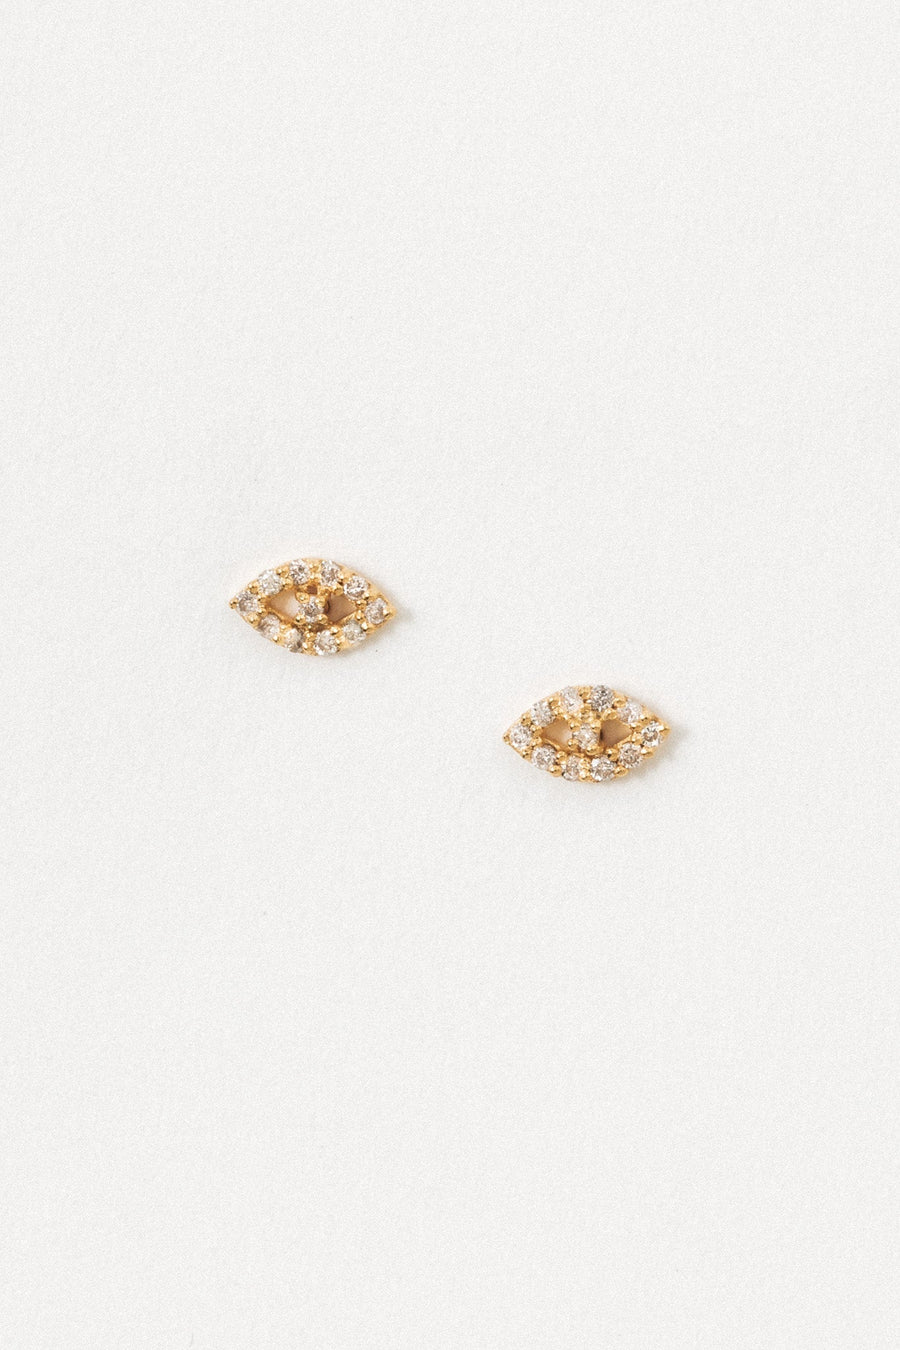 LA KAISER Jewelry Gold / Diamond 14kt Soul Vision Diamond Earrings